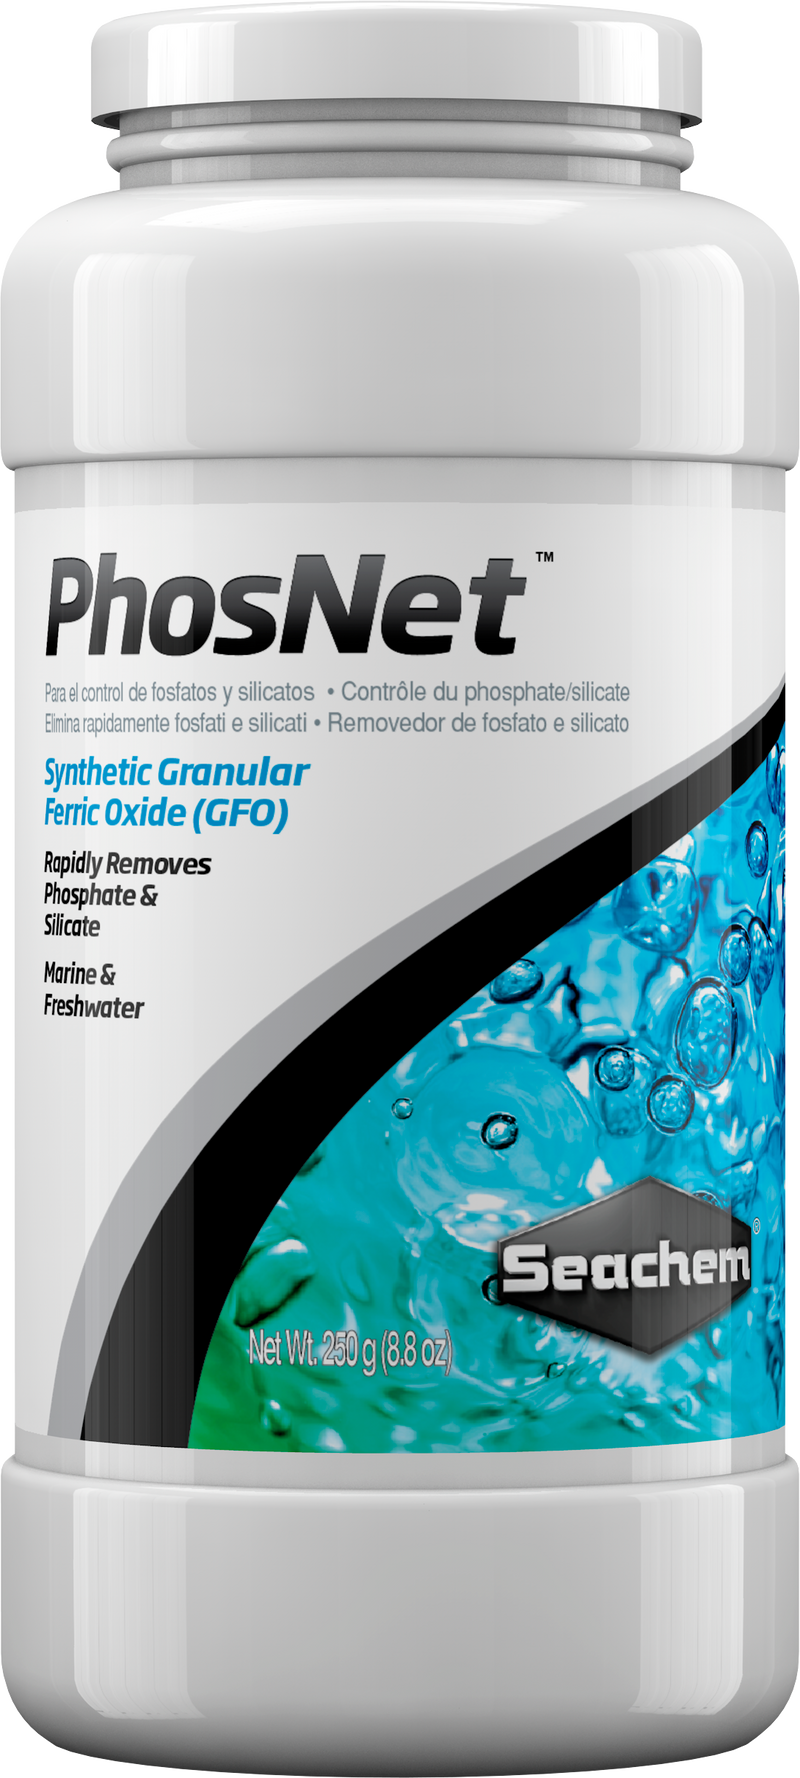 Seachem Phosnet